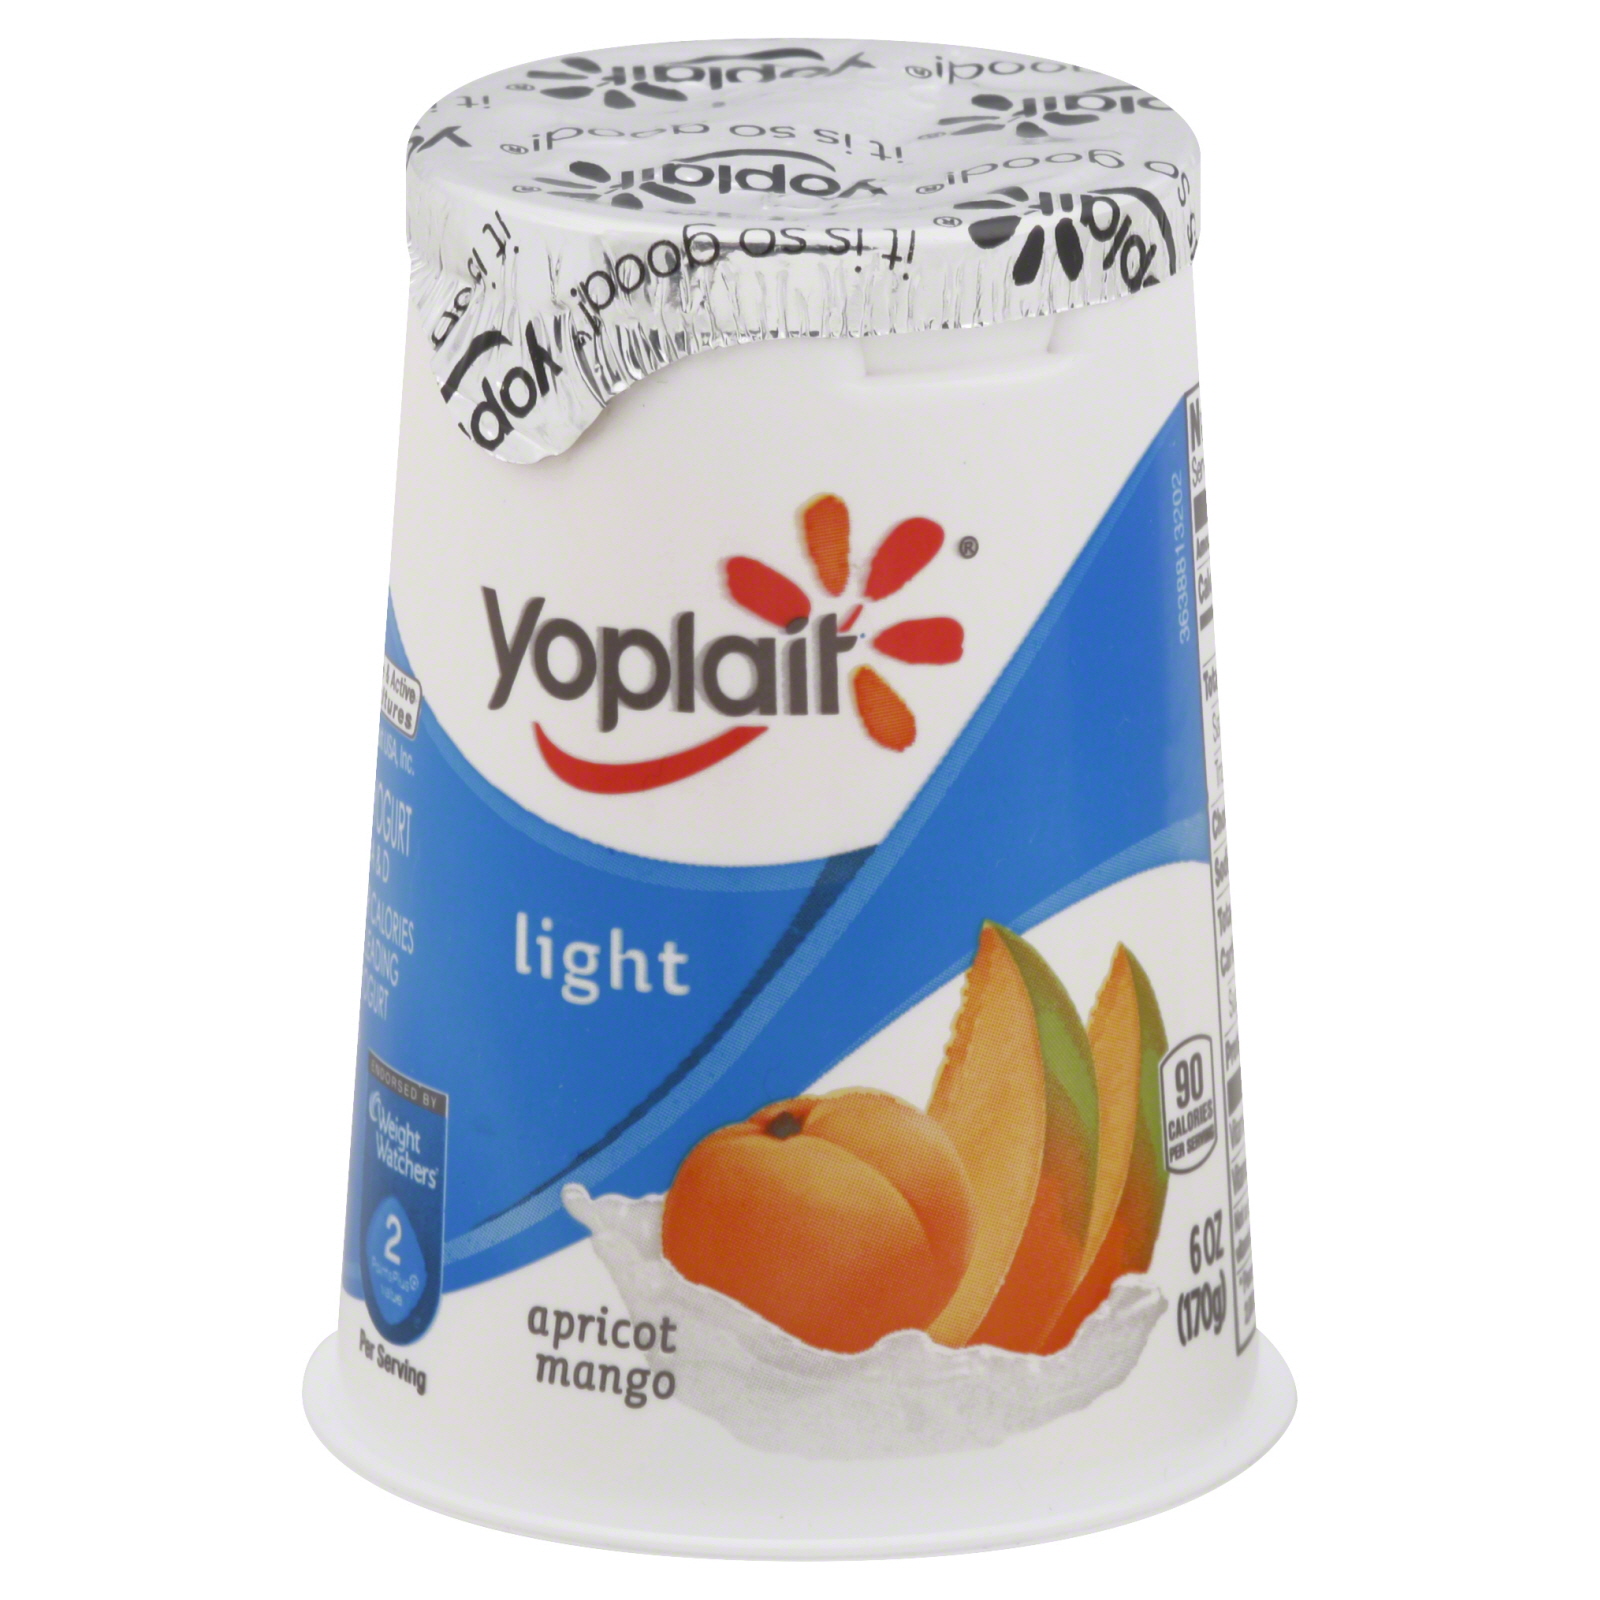 Yoplait Light Yogurt, Nonfat, Fat Free, Apricot Mango, 6 oz (170 g)